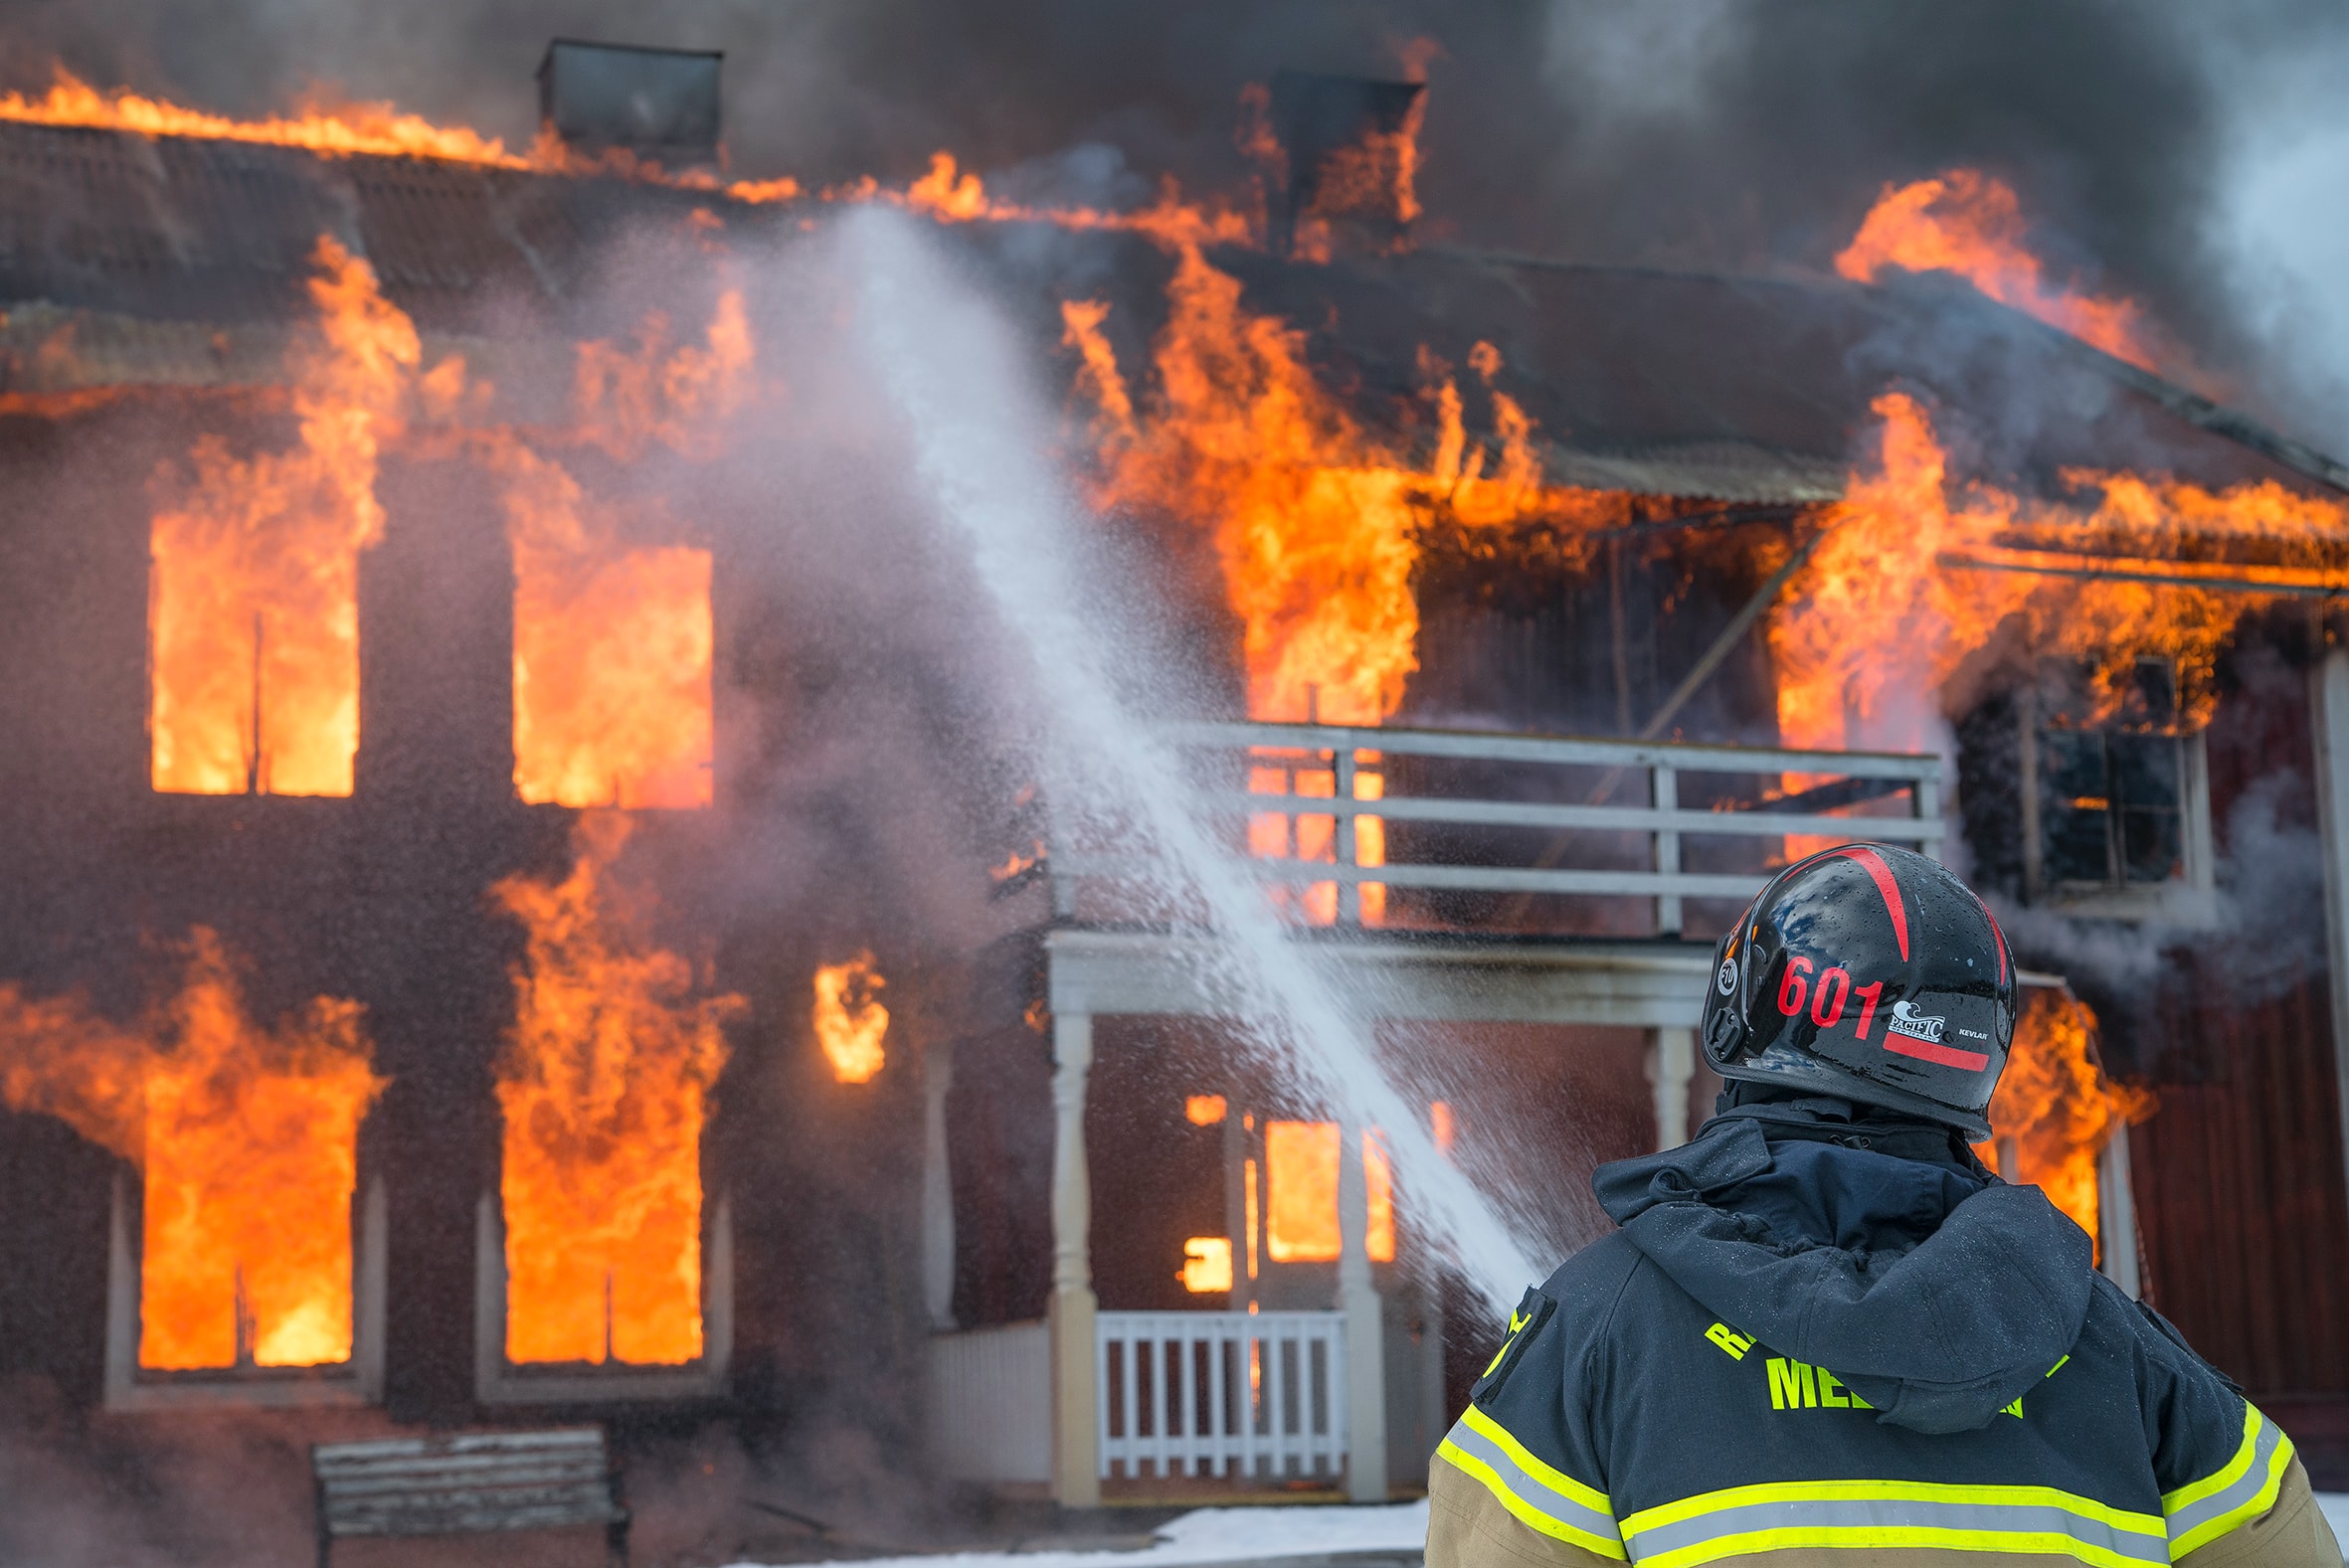 Fireman putting out a house fire